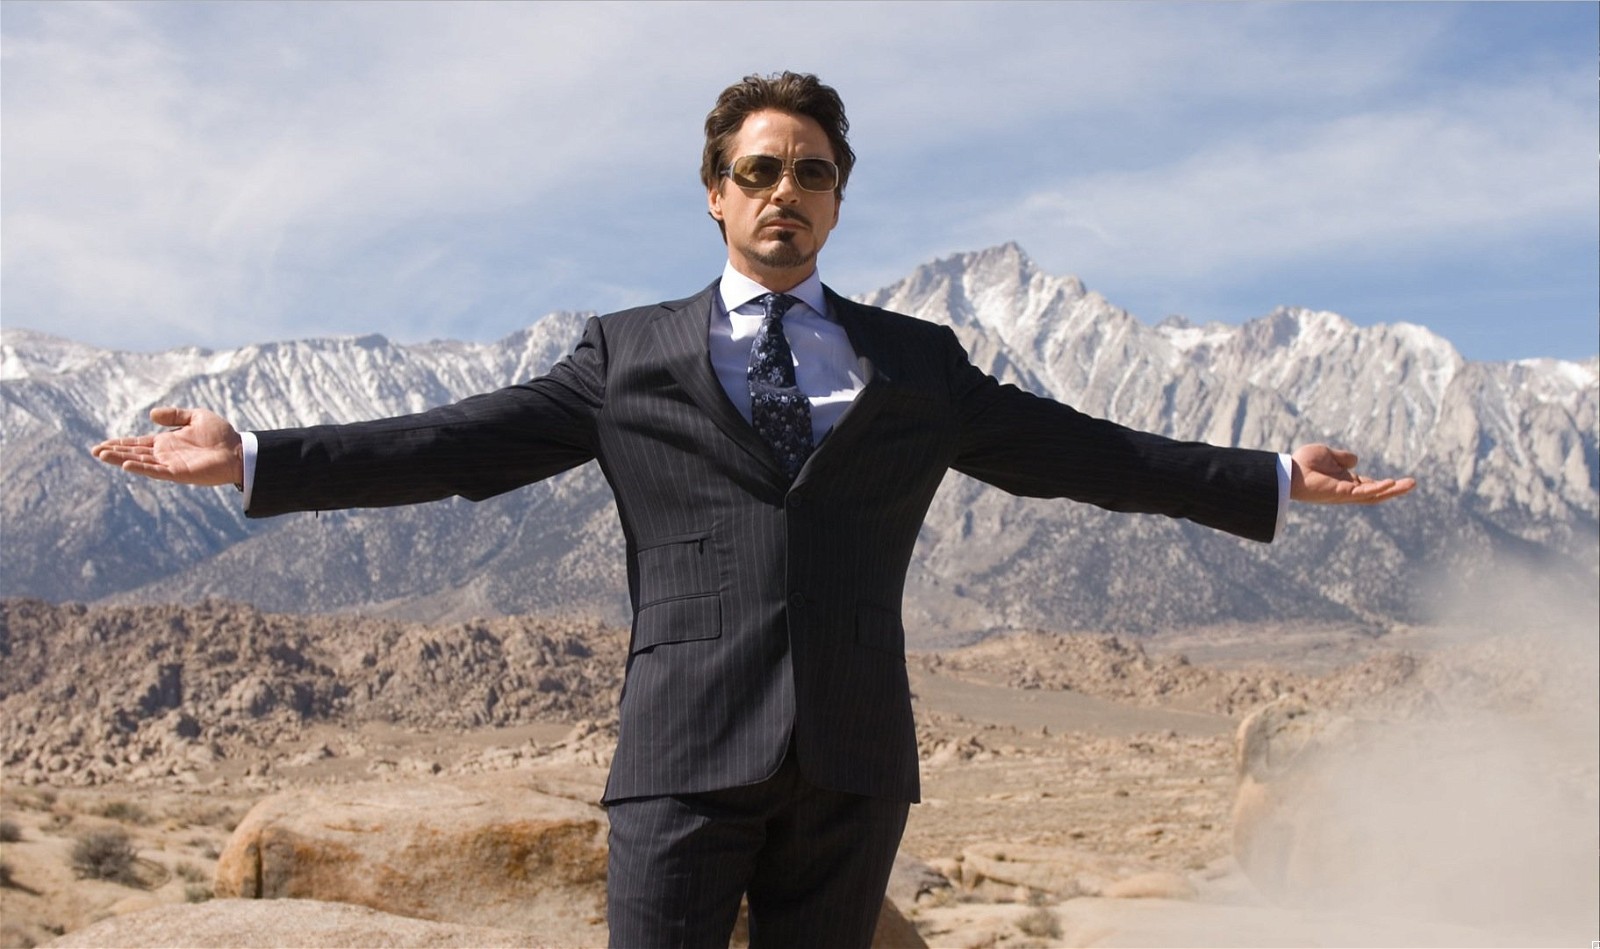 Hollywood star Robert Downey Jr in Iron Man (2008)